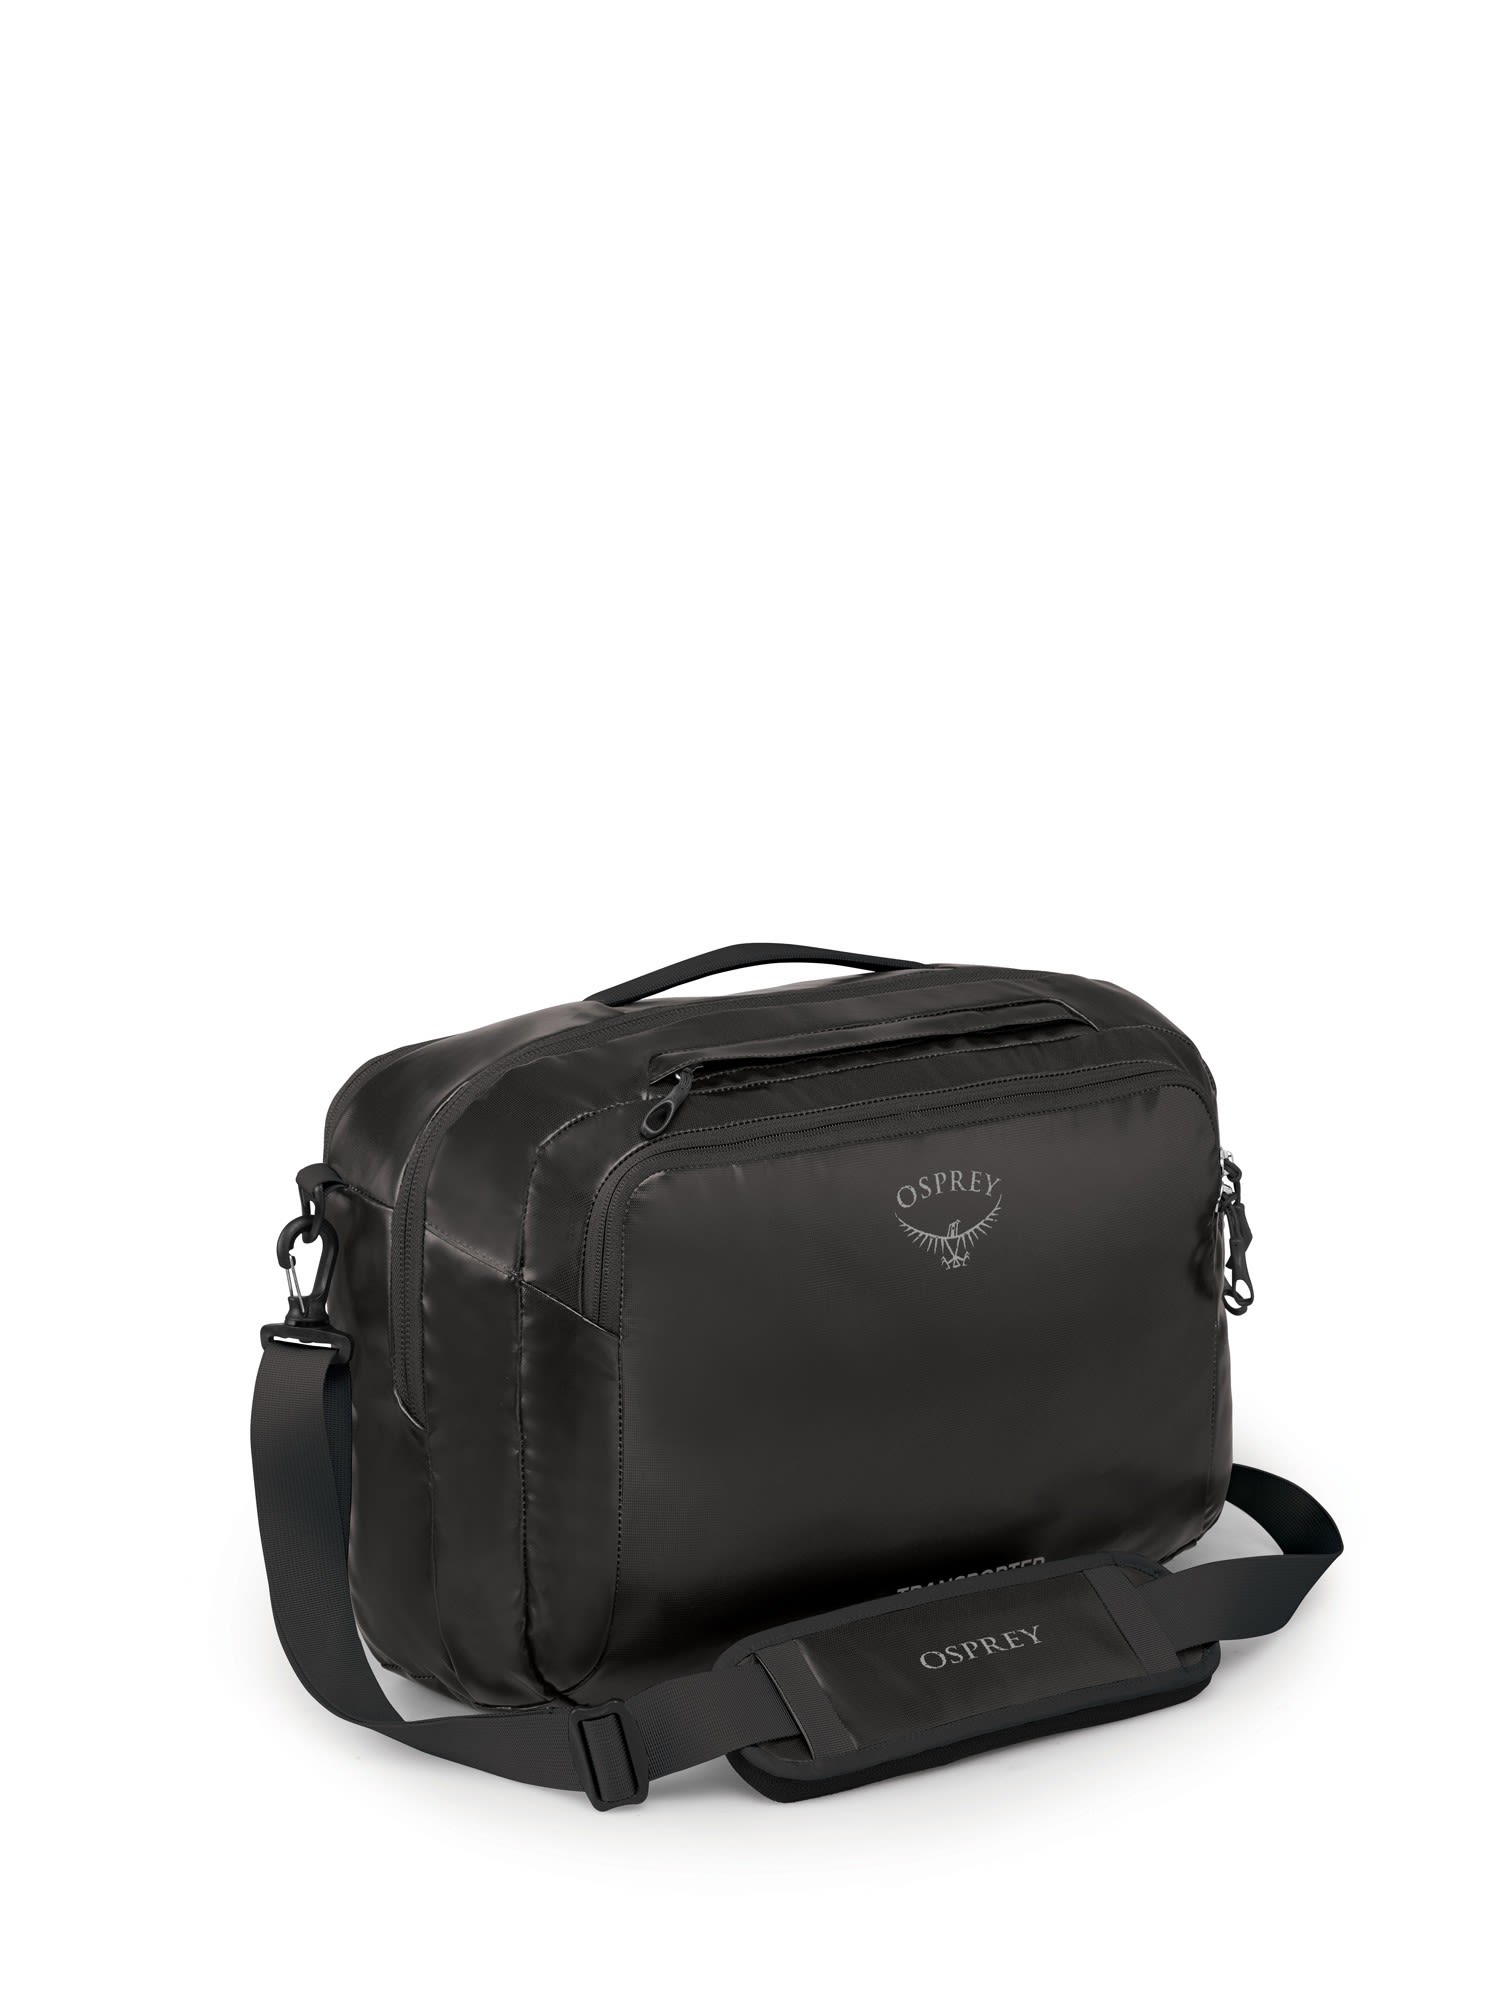 Osprey Transporter Boarding Bag Schwarz- Notebooktaschen- Grsse 20l - Farbe Black